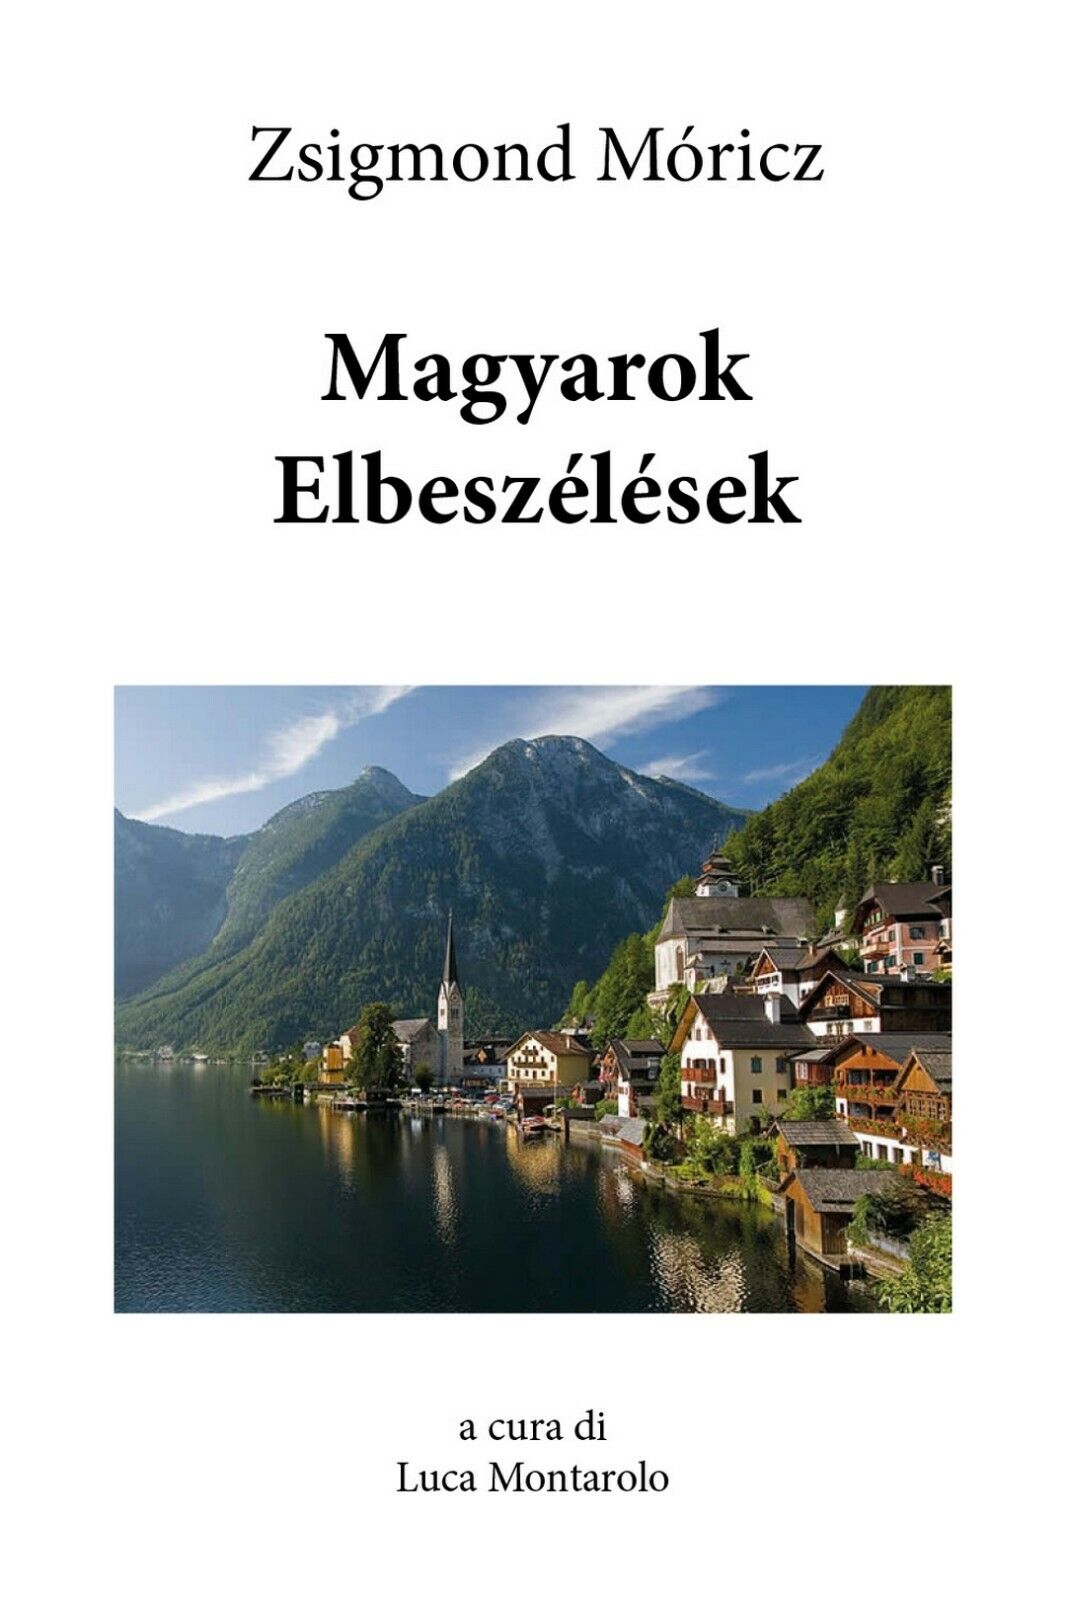 Magyarok Elbesz?l?sek  di Zsigmond M?ricz, L. Montarolo,  2018,  Youcanprint